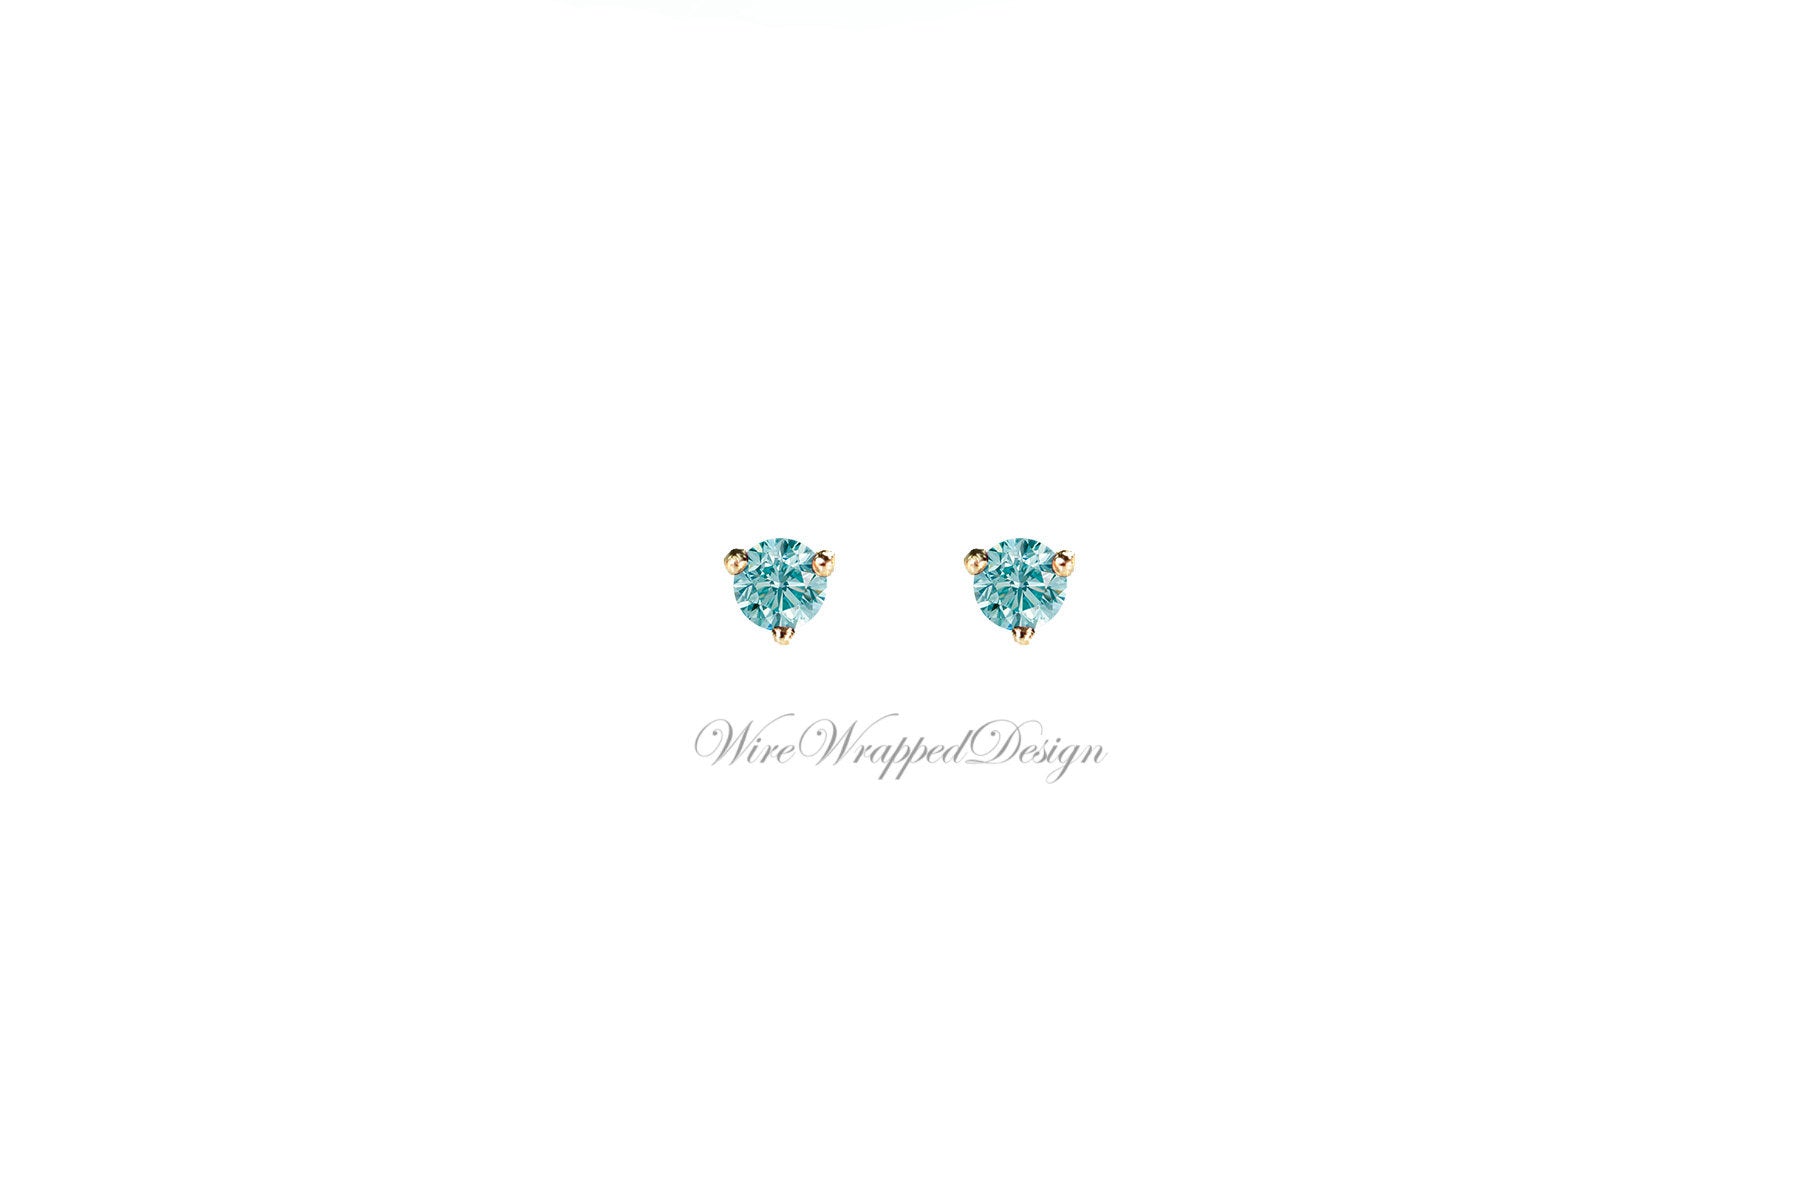 PAIR Genuine Aqua BLUE DIAMOND Earrings Studs 2.5mm 0.12tcw Martini 14k Solid Gold (Yellow, Rose, White) Platinum Silver Cartilage Helix